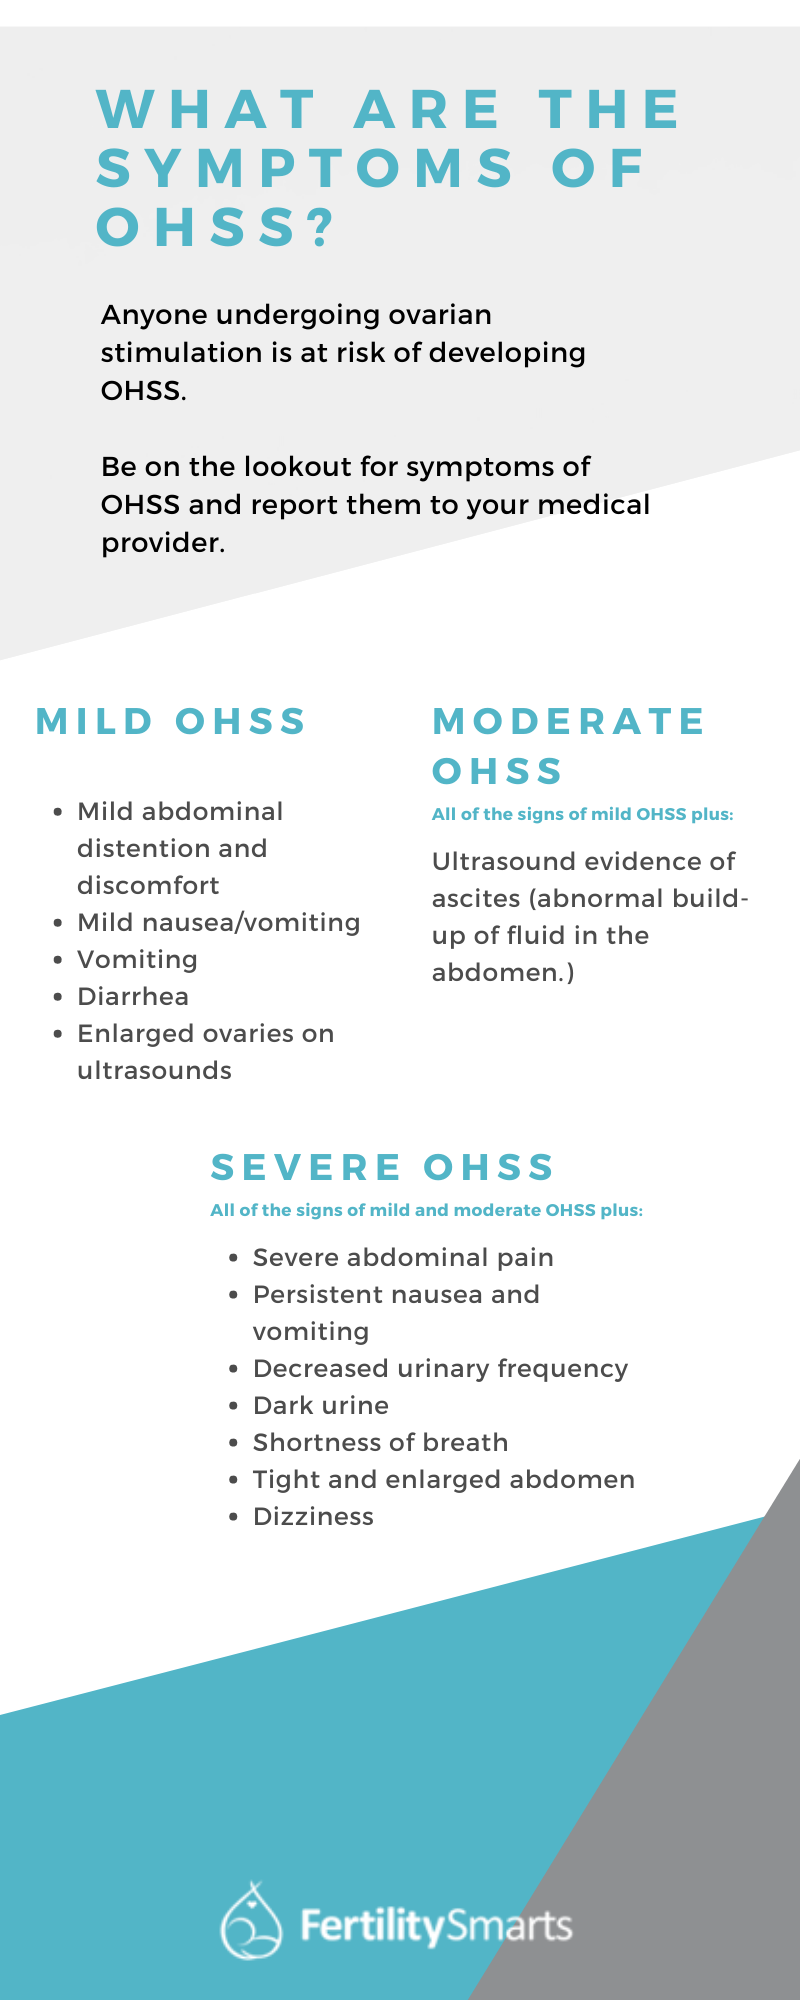 A list of the symptoms of OHSS